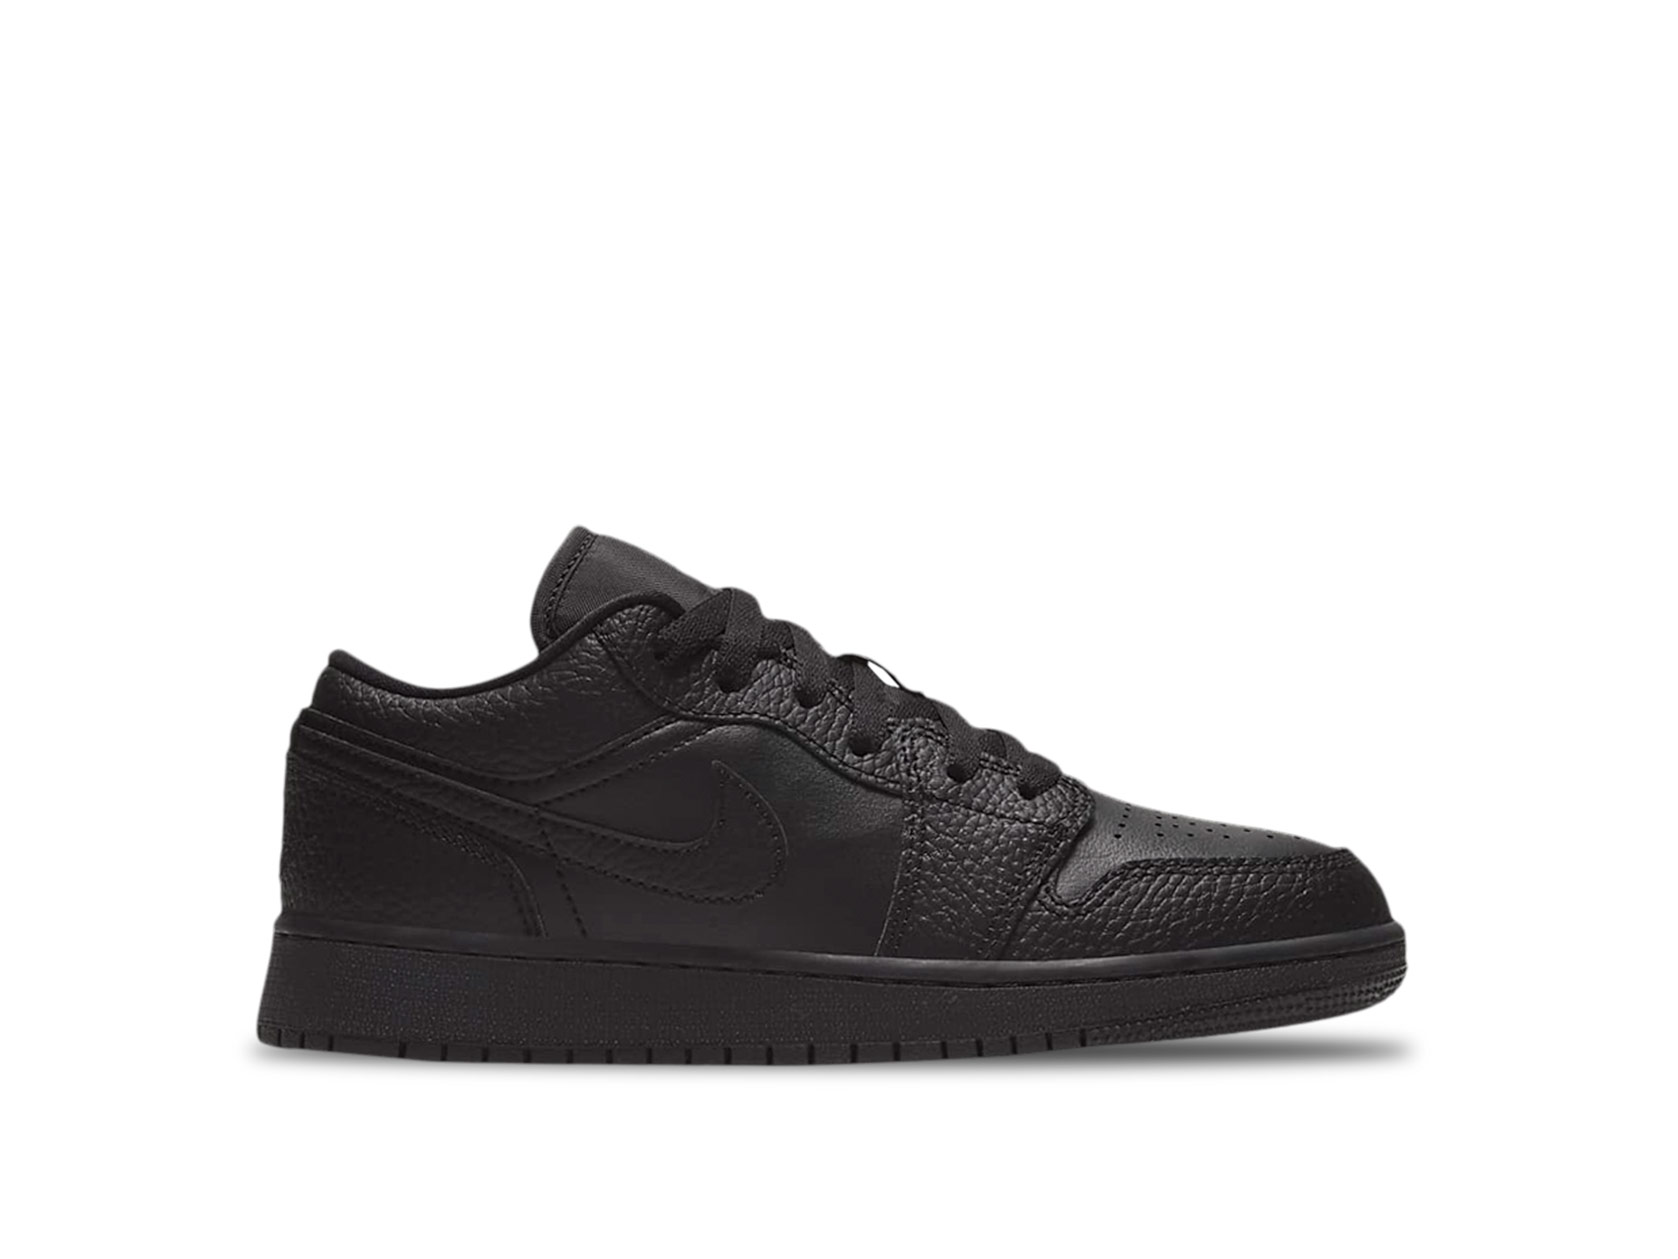 Black Jordans | Latest All Black Nike Air Jordan Trainers